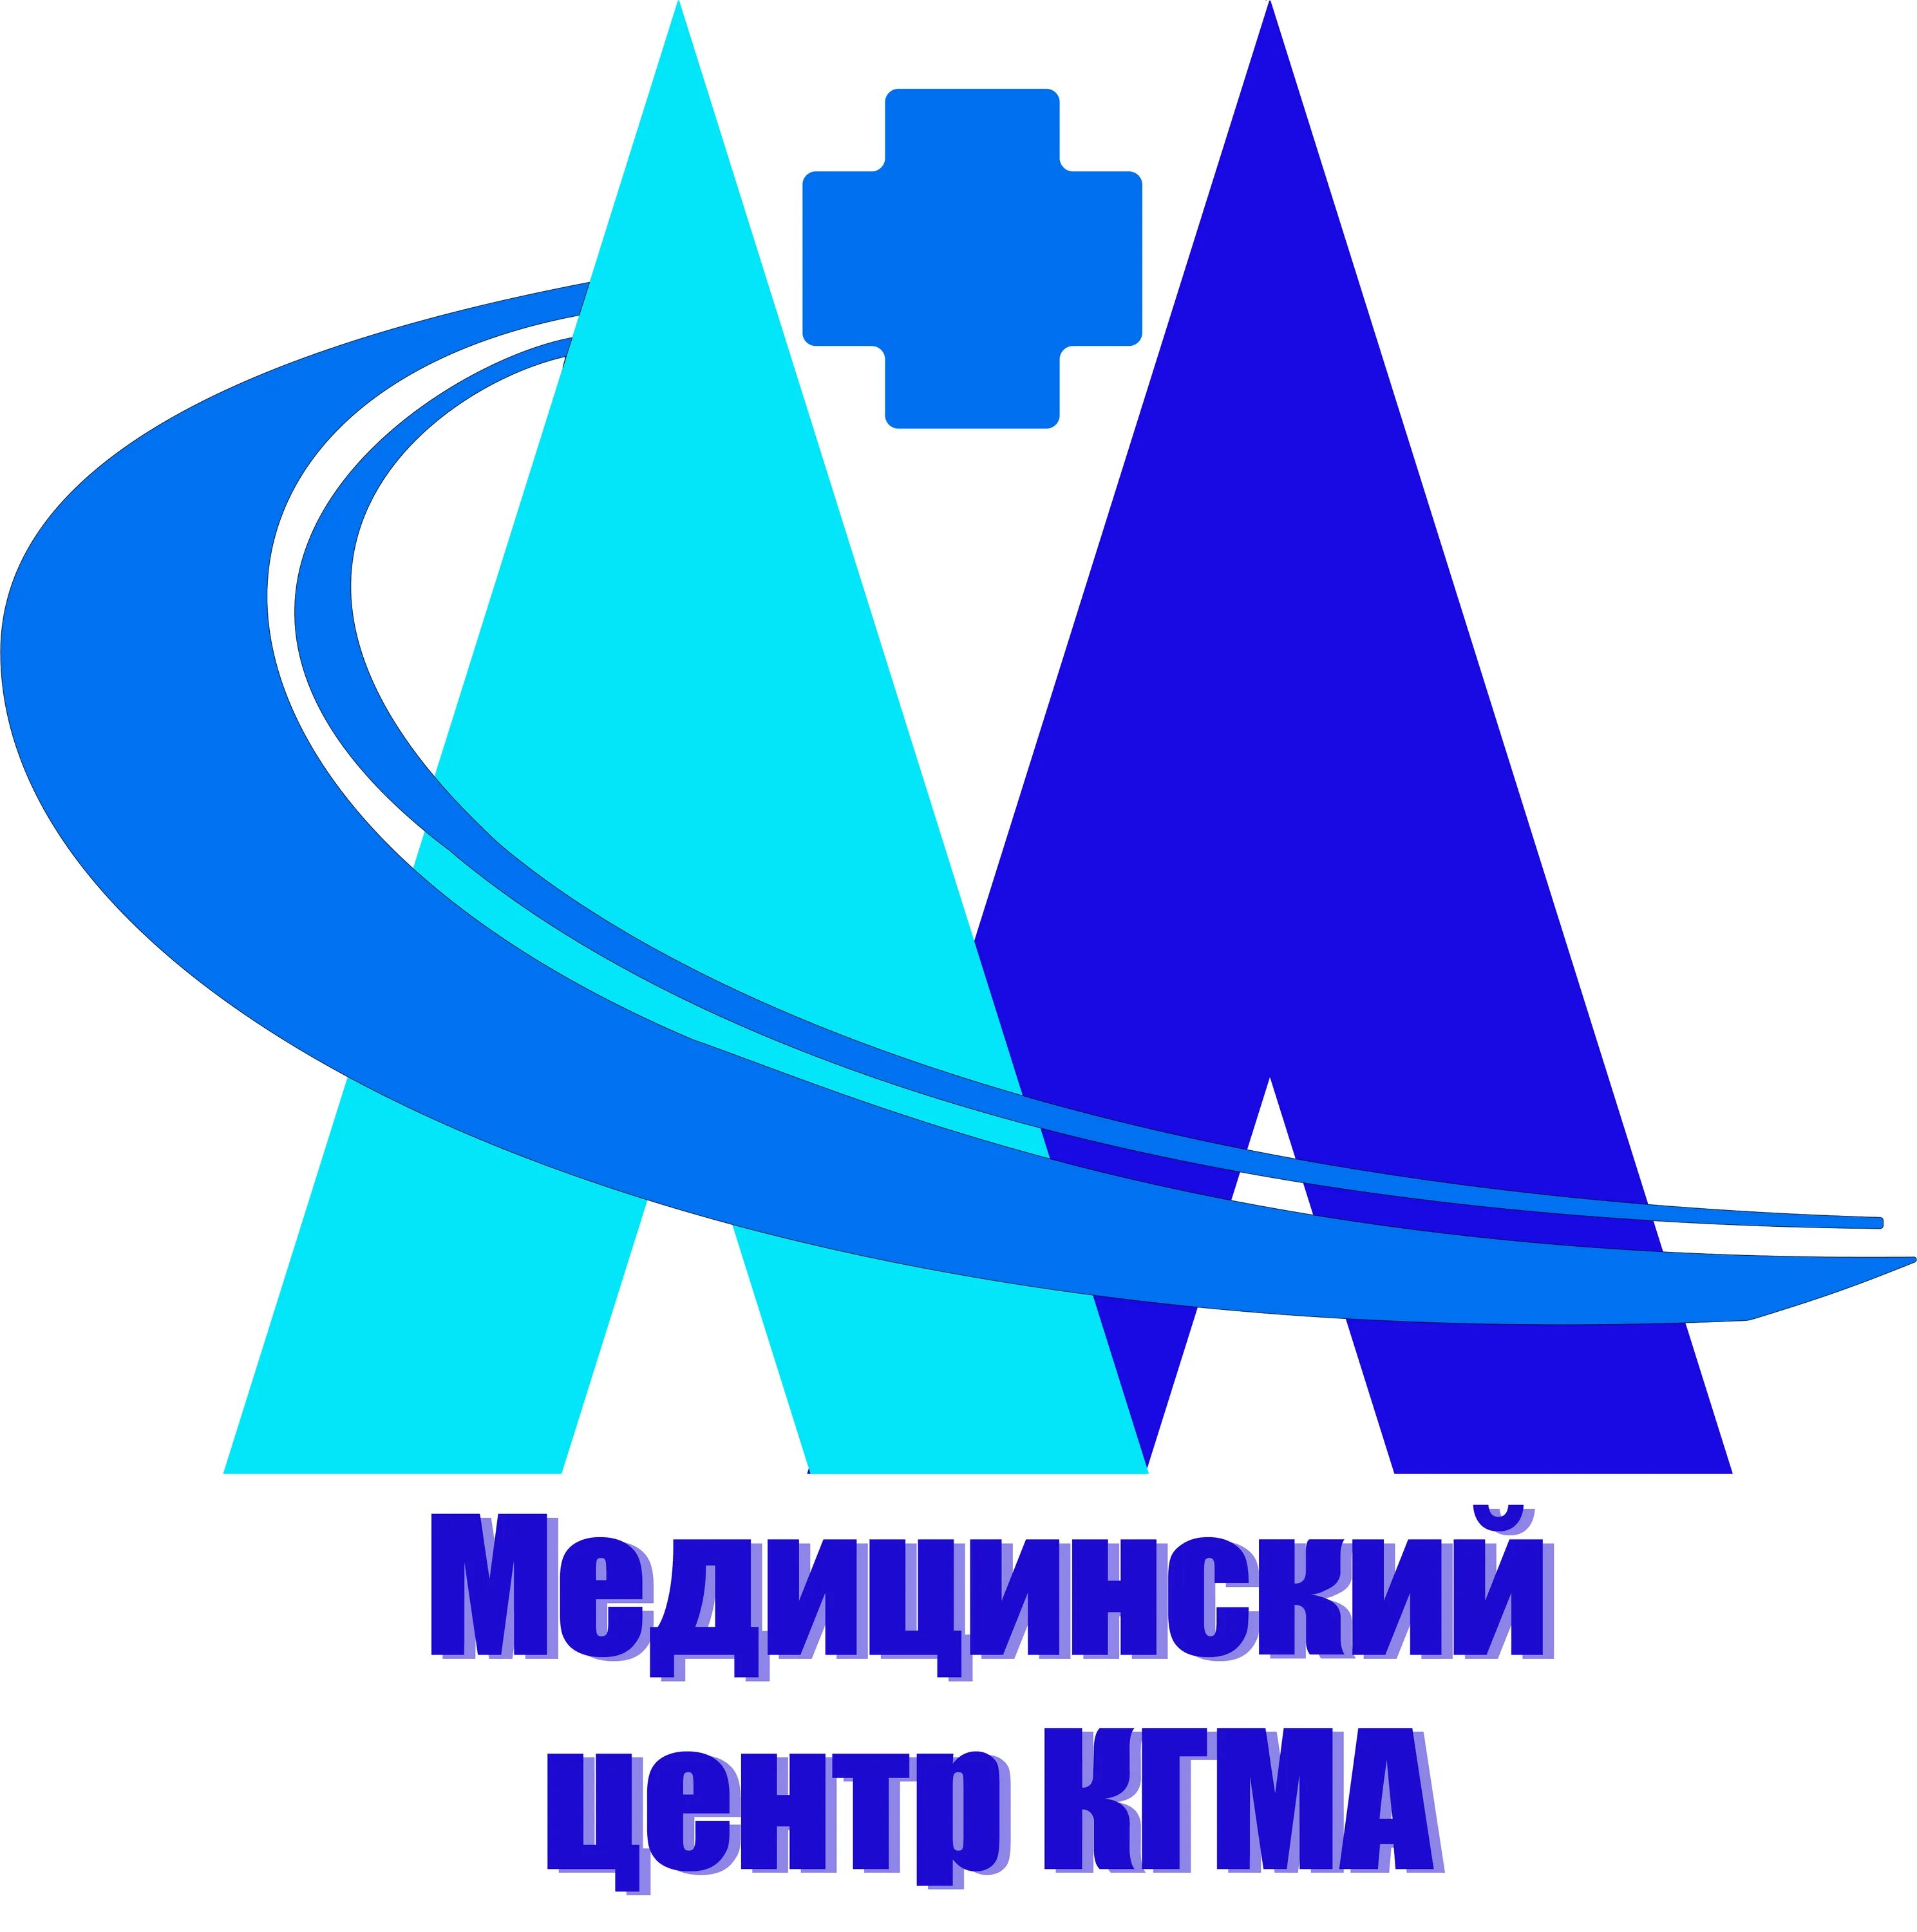 Медцентр бишкек. Медицинский центр КГМА. Медцентр КГМА Бишкек. КГМА логотип. Медцентр КГМА фото.